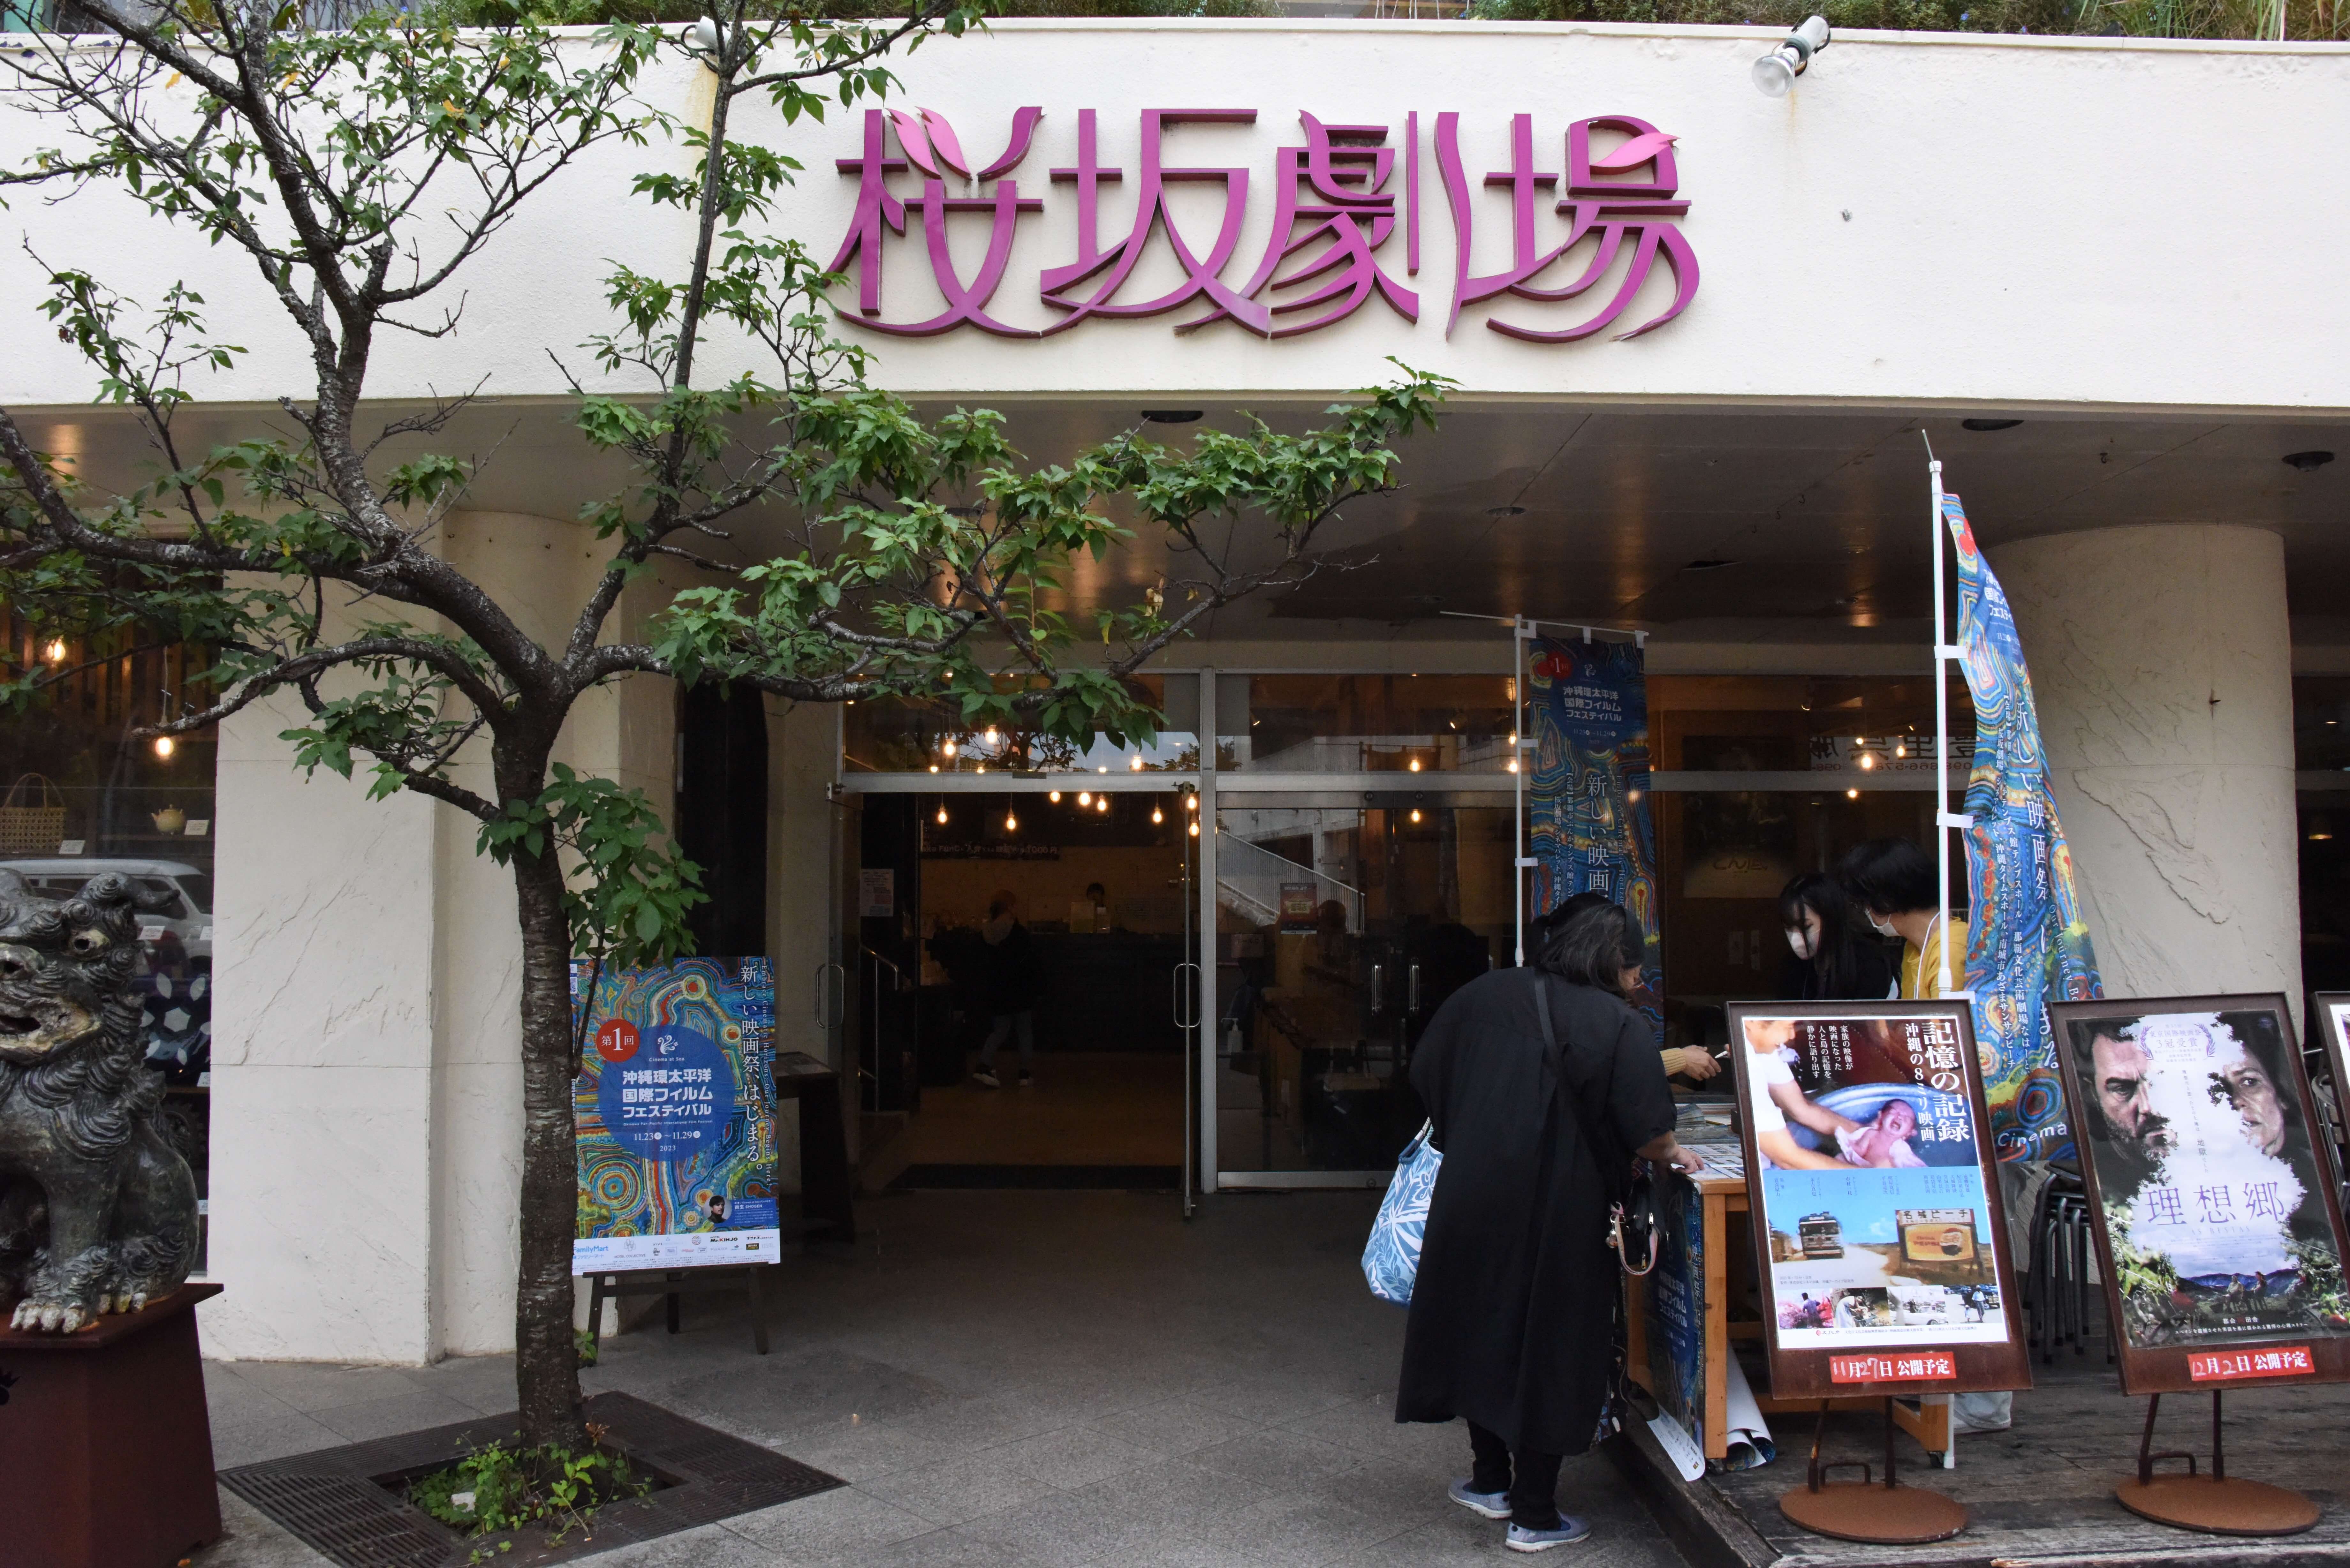 Cinema at Sea在當地地標櫻坂劇場及那霸文化藝術劇場等場館進行展映。